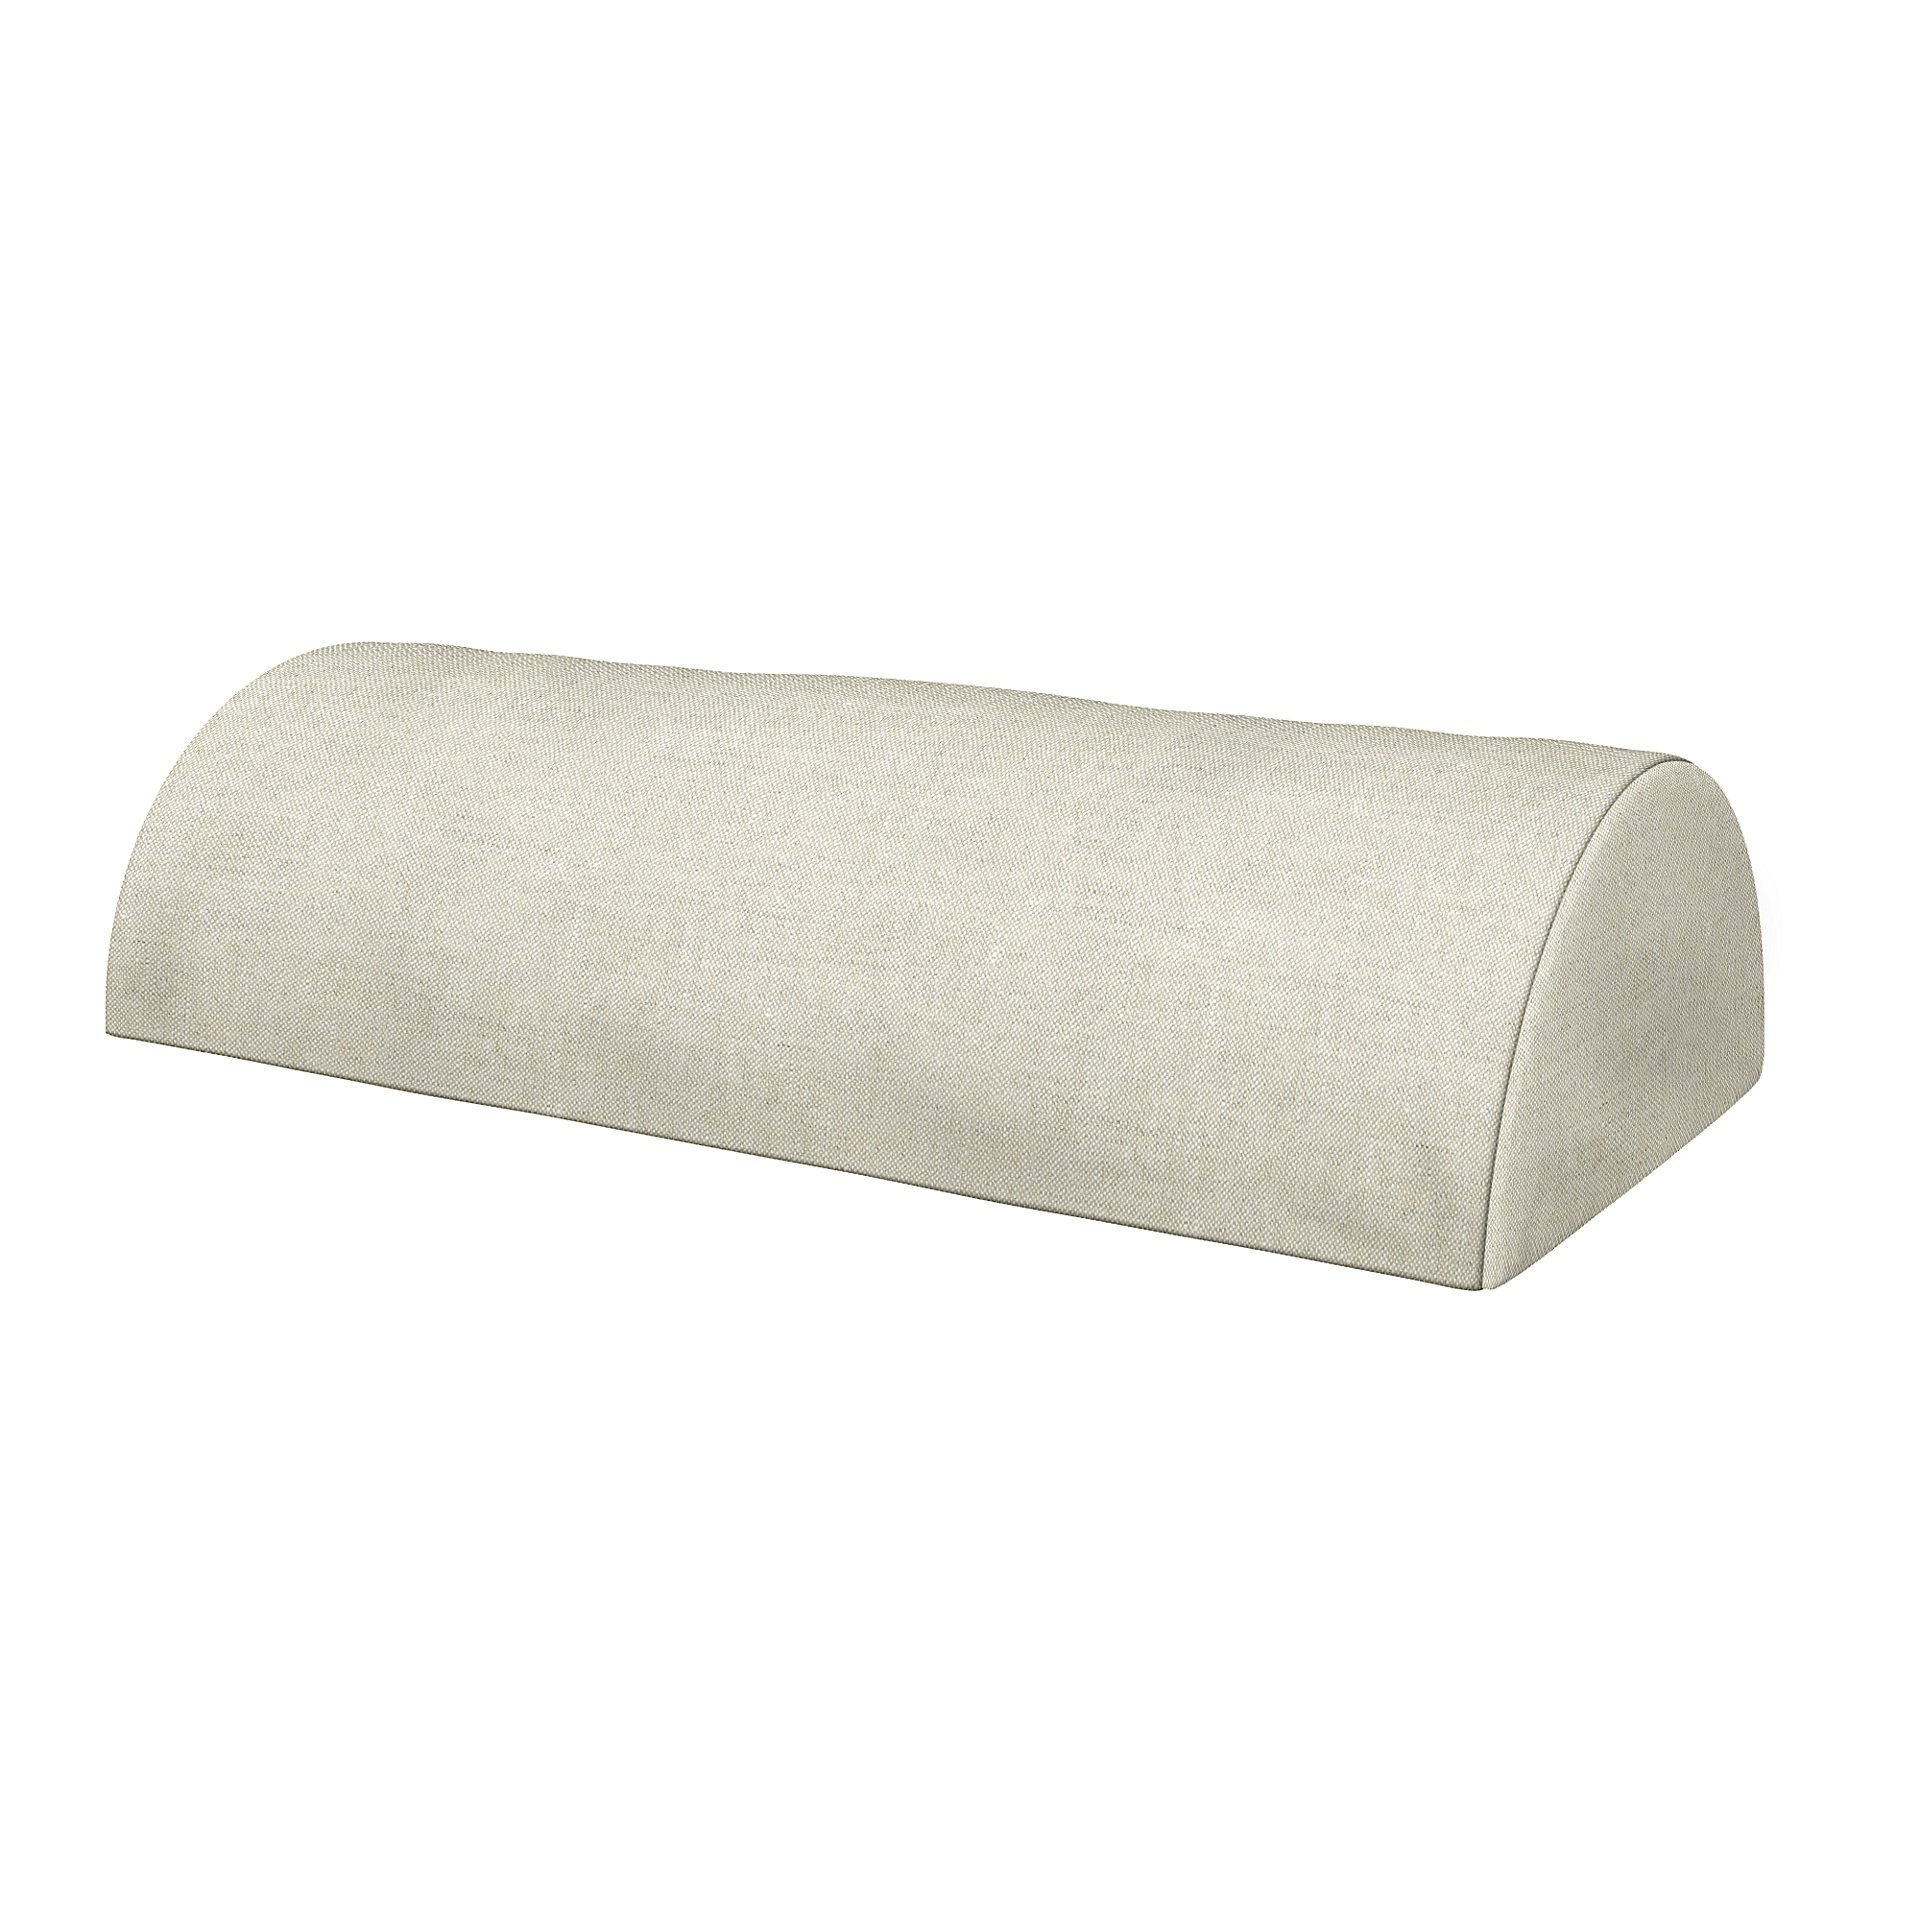 IKEA - Cushion Cover Beddinge Half Moon , Natural, Linen - Bemz